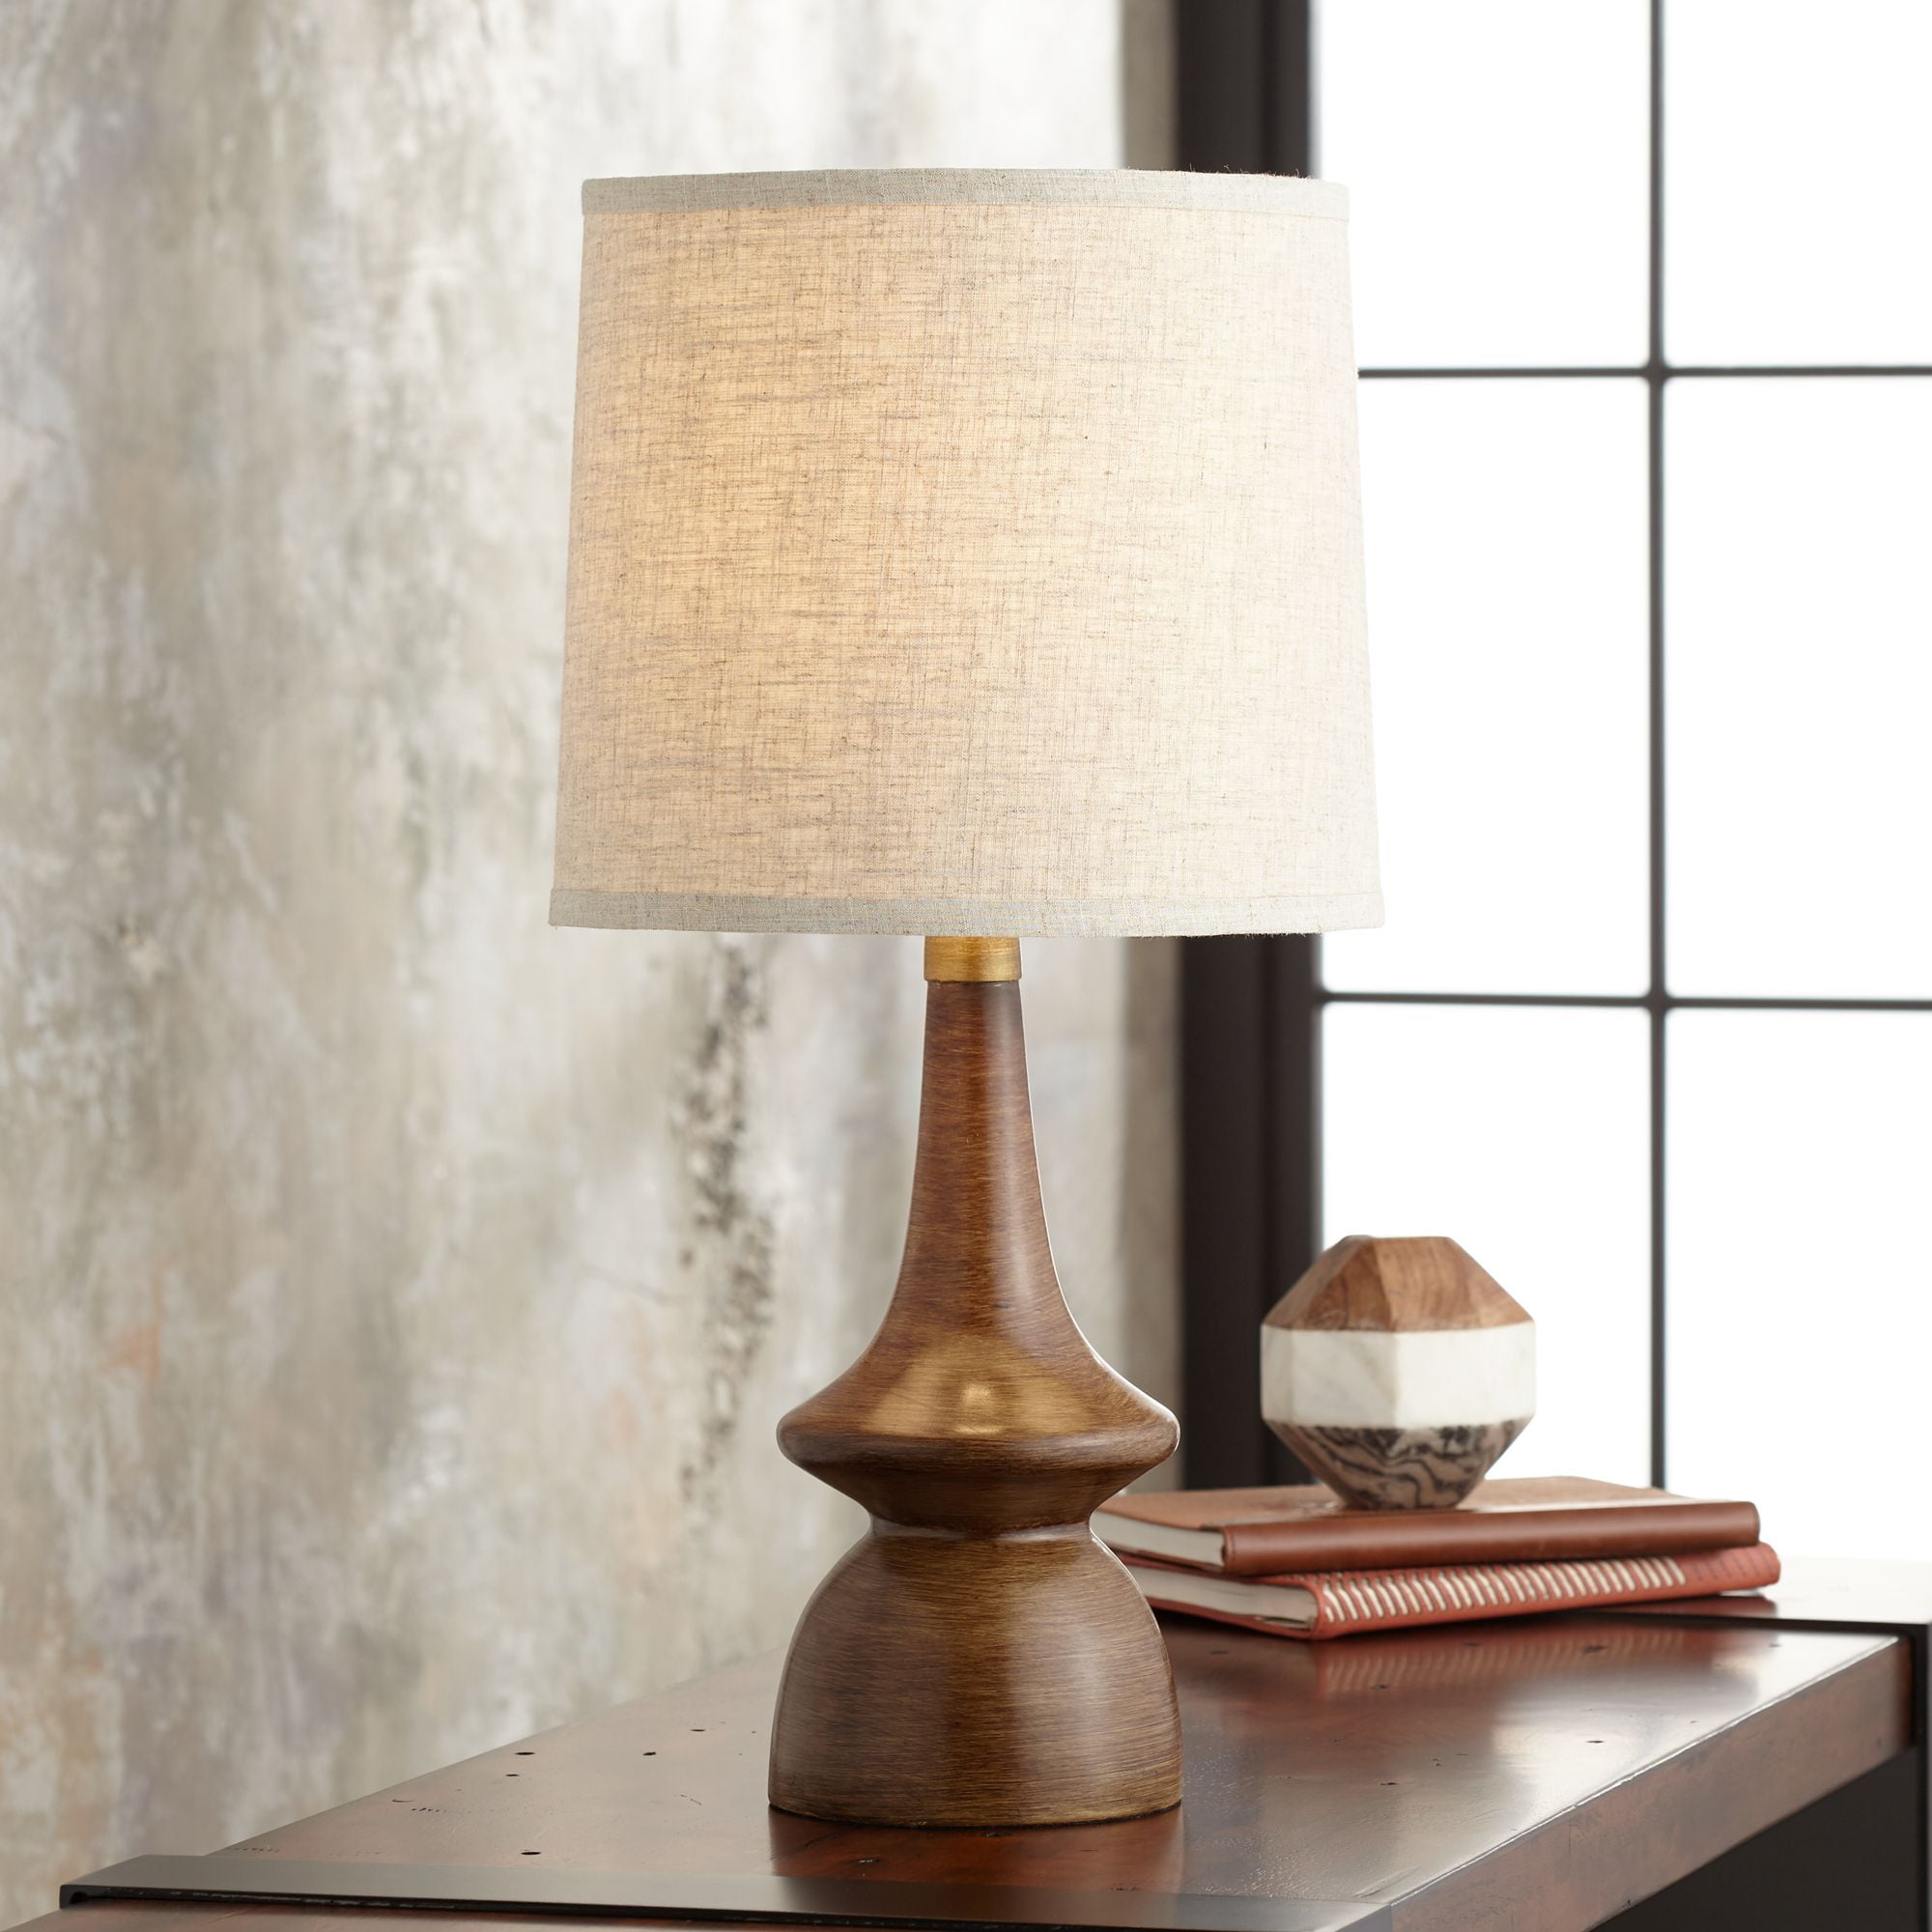 360 Lighting Mid Century Modern Table Lamp Brown Walnut Wood Off White